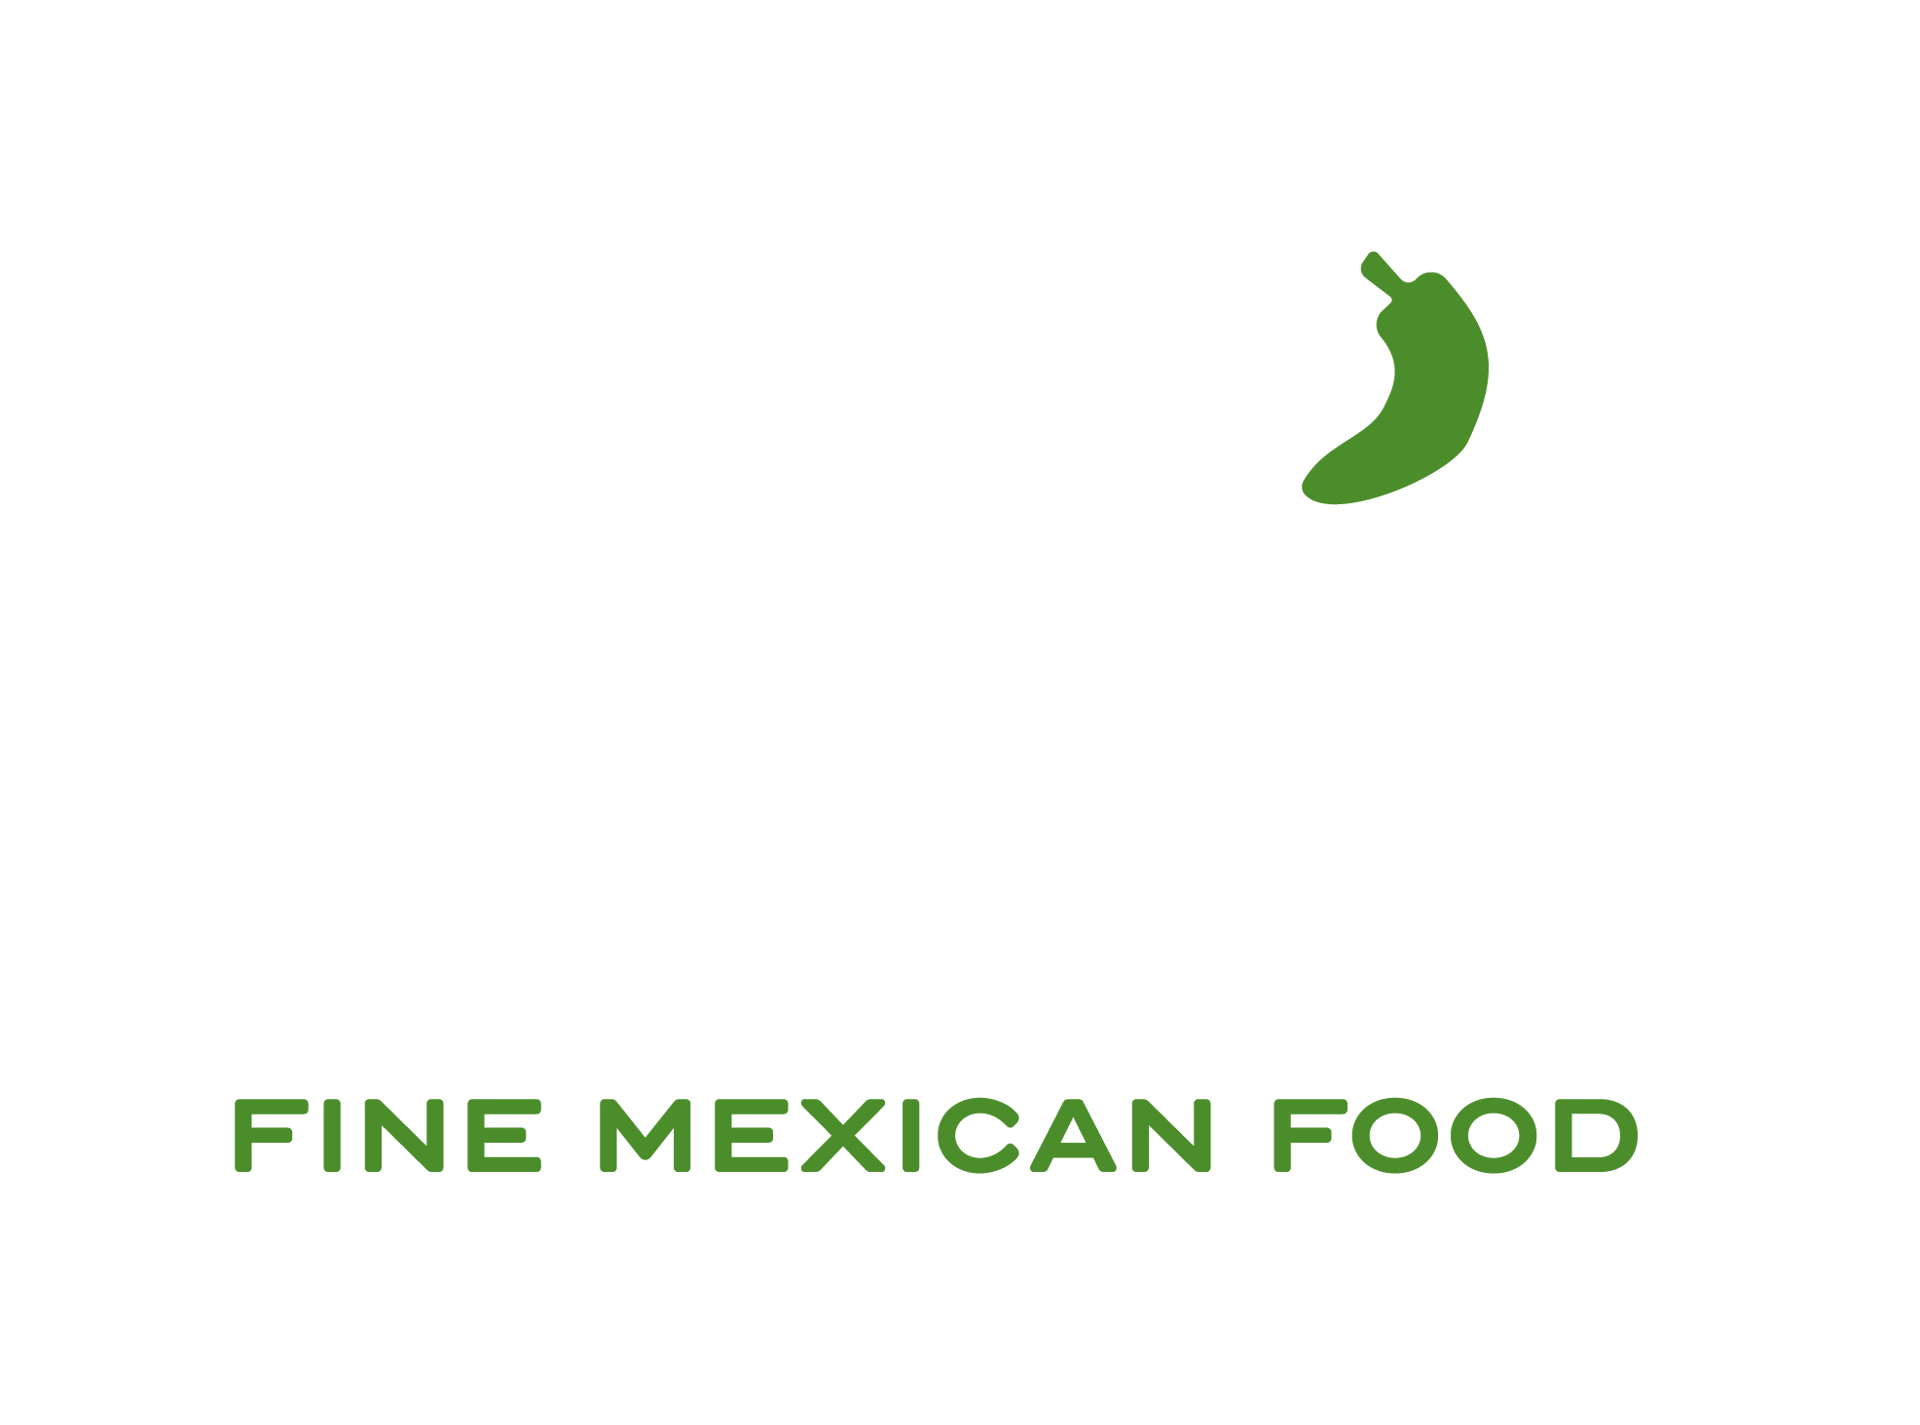 Leal's logo